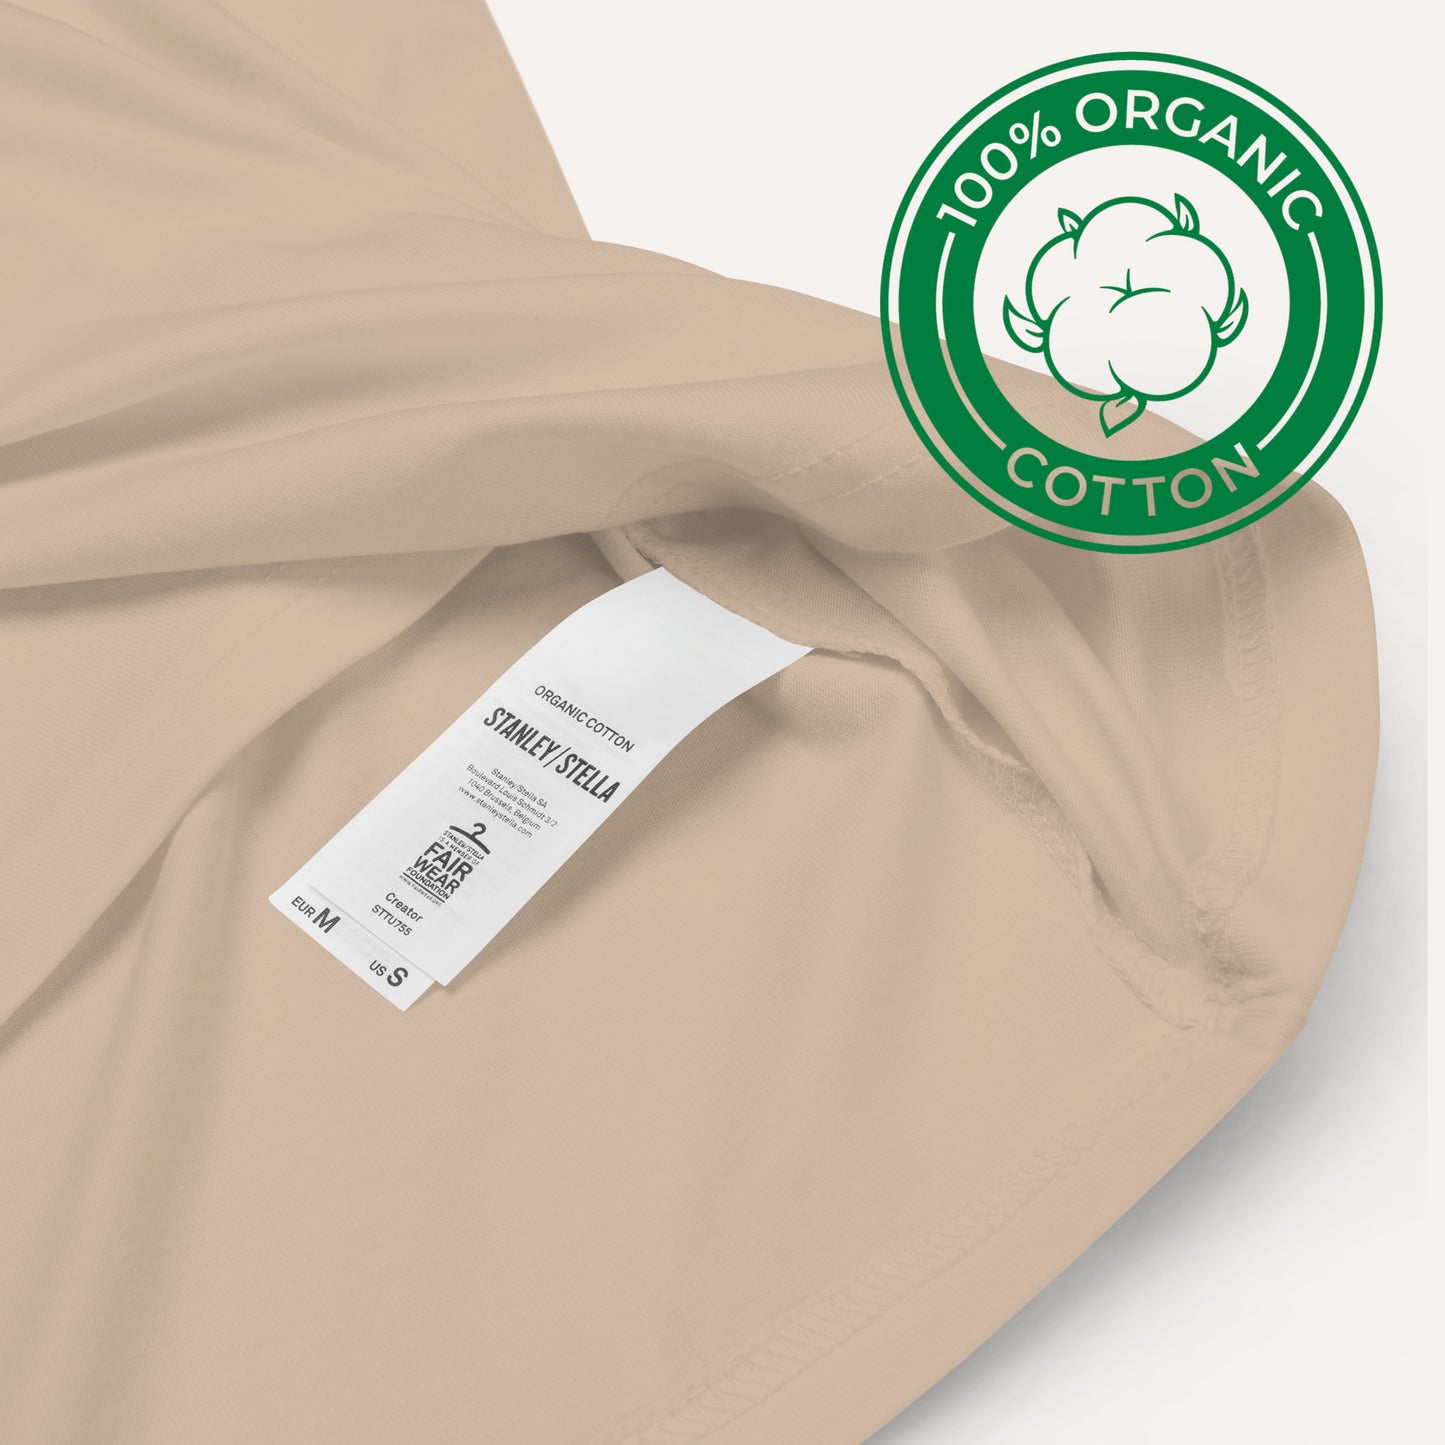 Closeup of Beard Game Organic Cotton T-shirt label in Desert Dust